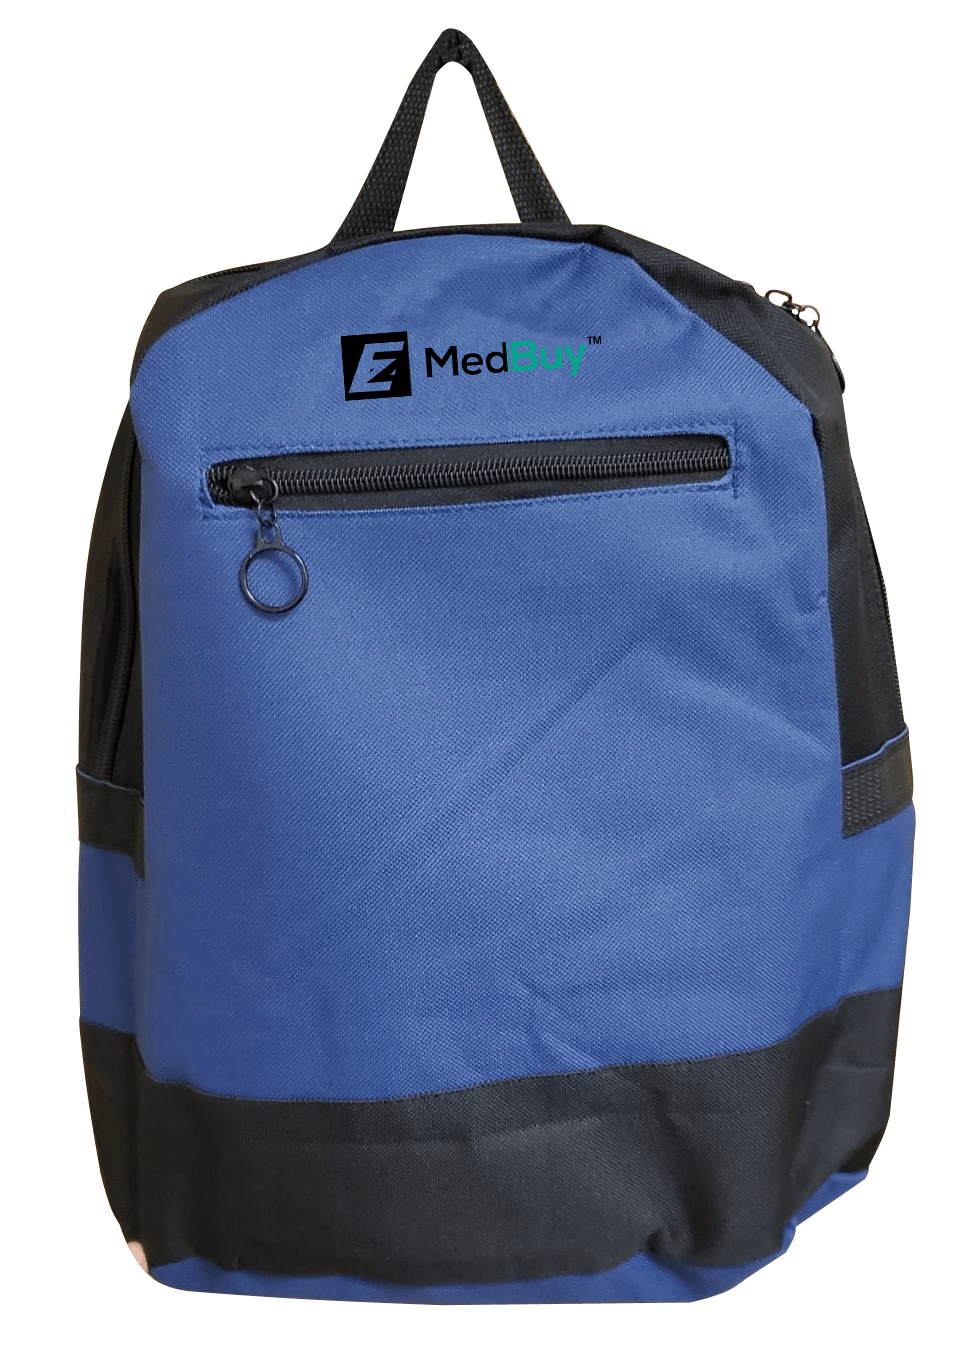 EZ MedBuy Homecraft Wheelchair Bag